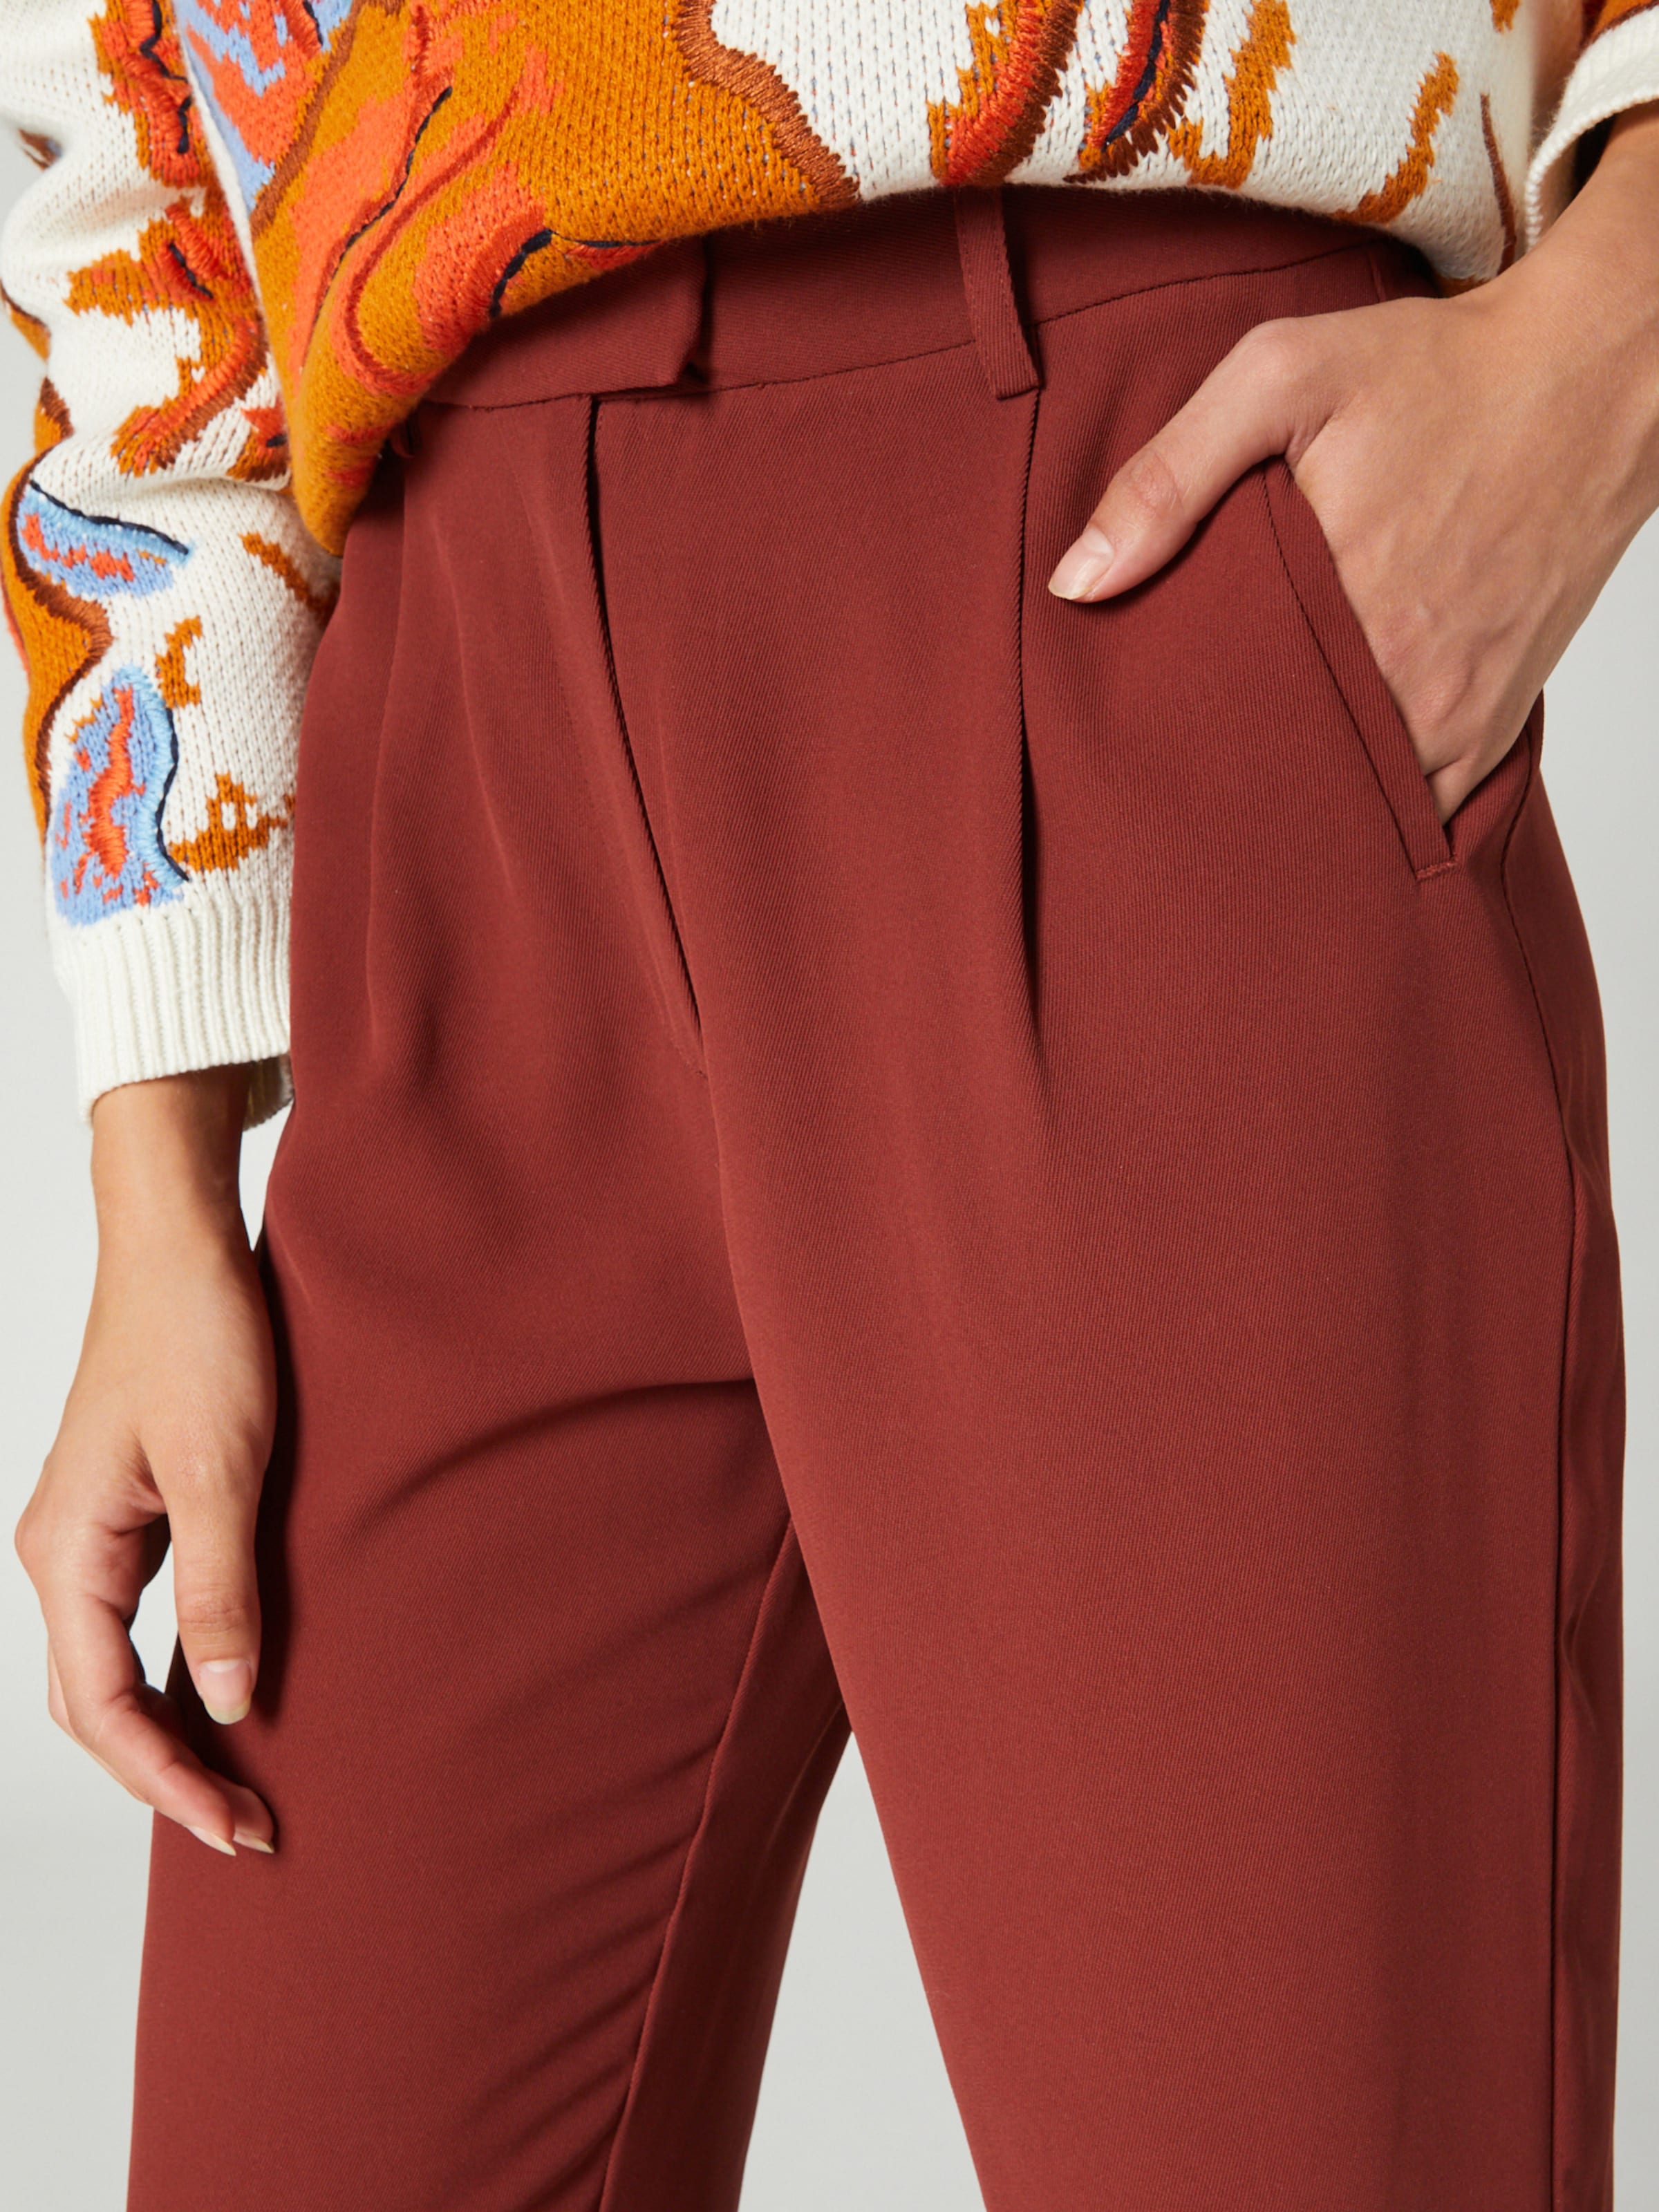 Bebiullo Women Autumn Casual Pants, Solid Color Drawstring Elastic-Waist  Long Trousers with Pockets for Girls,Gray/Black/Dark /Brick Red -  Walmart.com